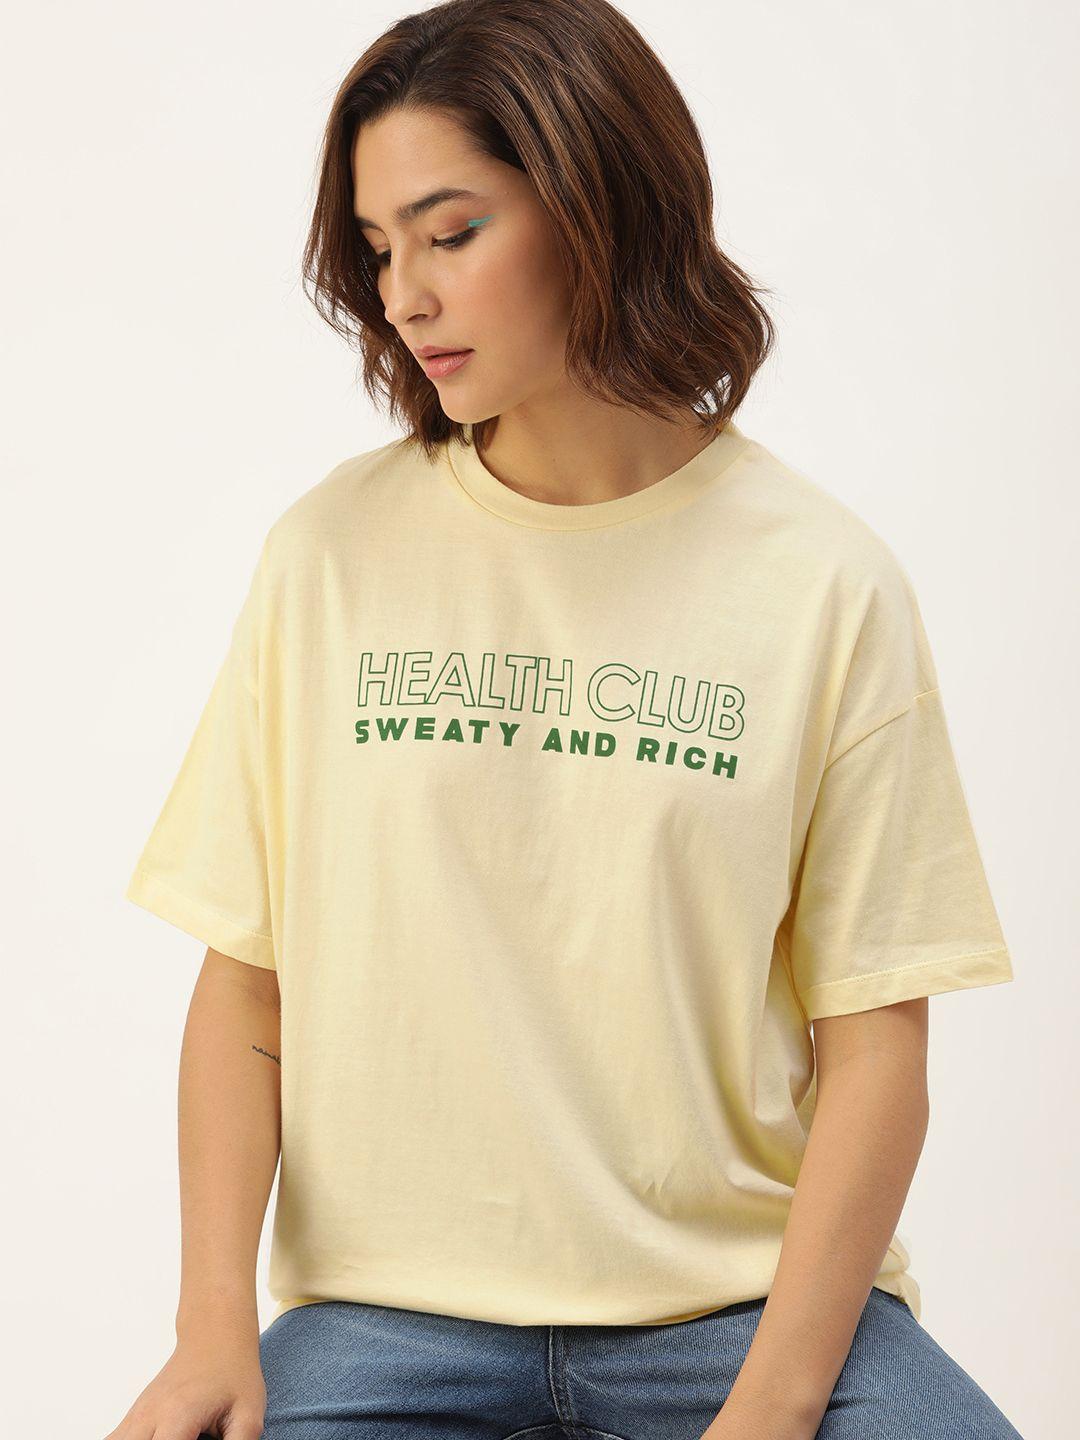 kook n keech typography printed drop-shoulder sleeves pure cotton oversized t-shirt